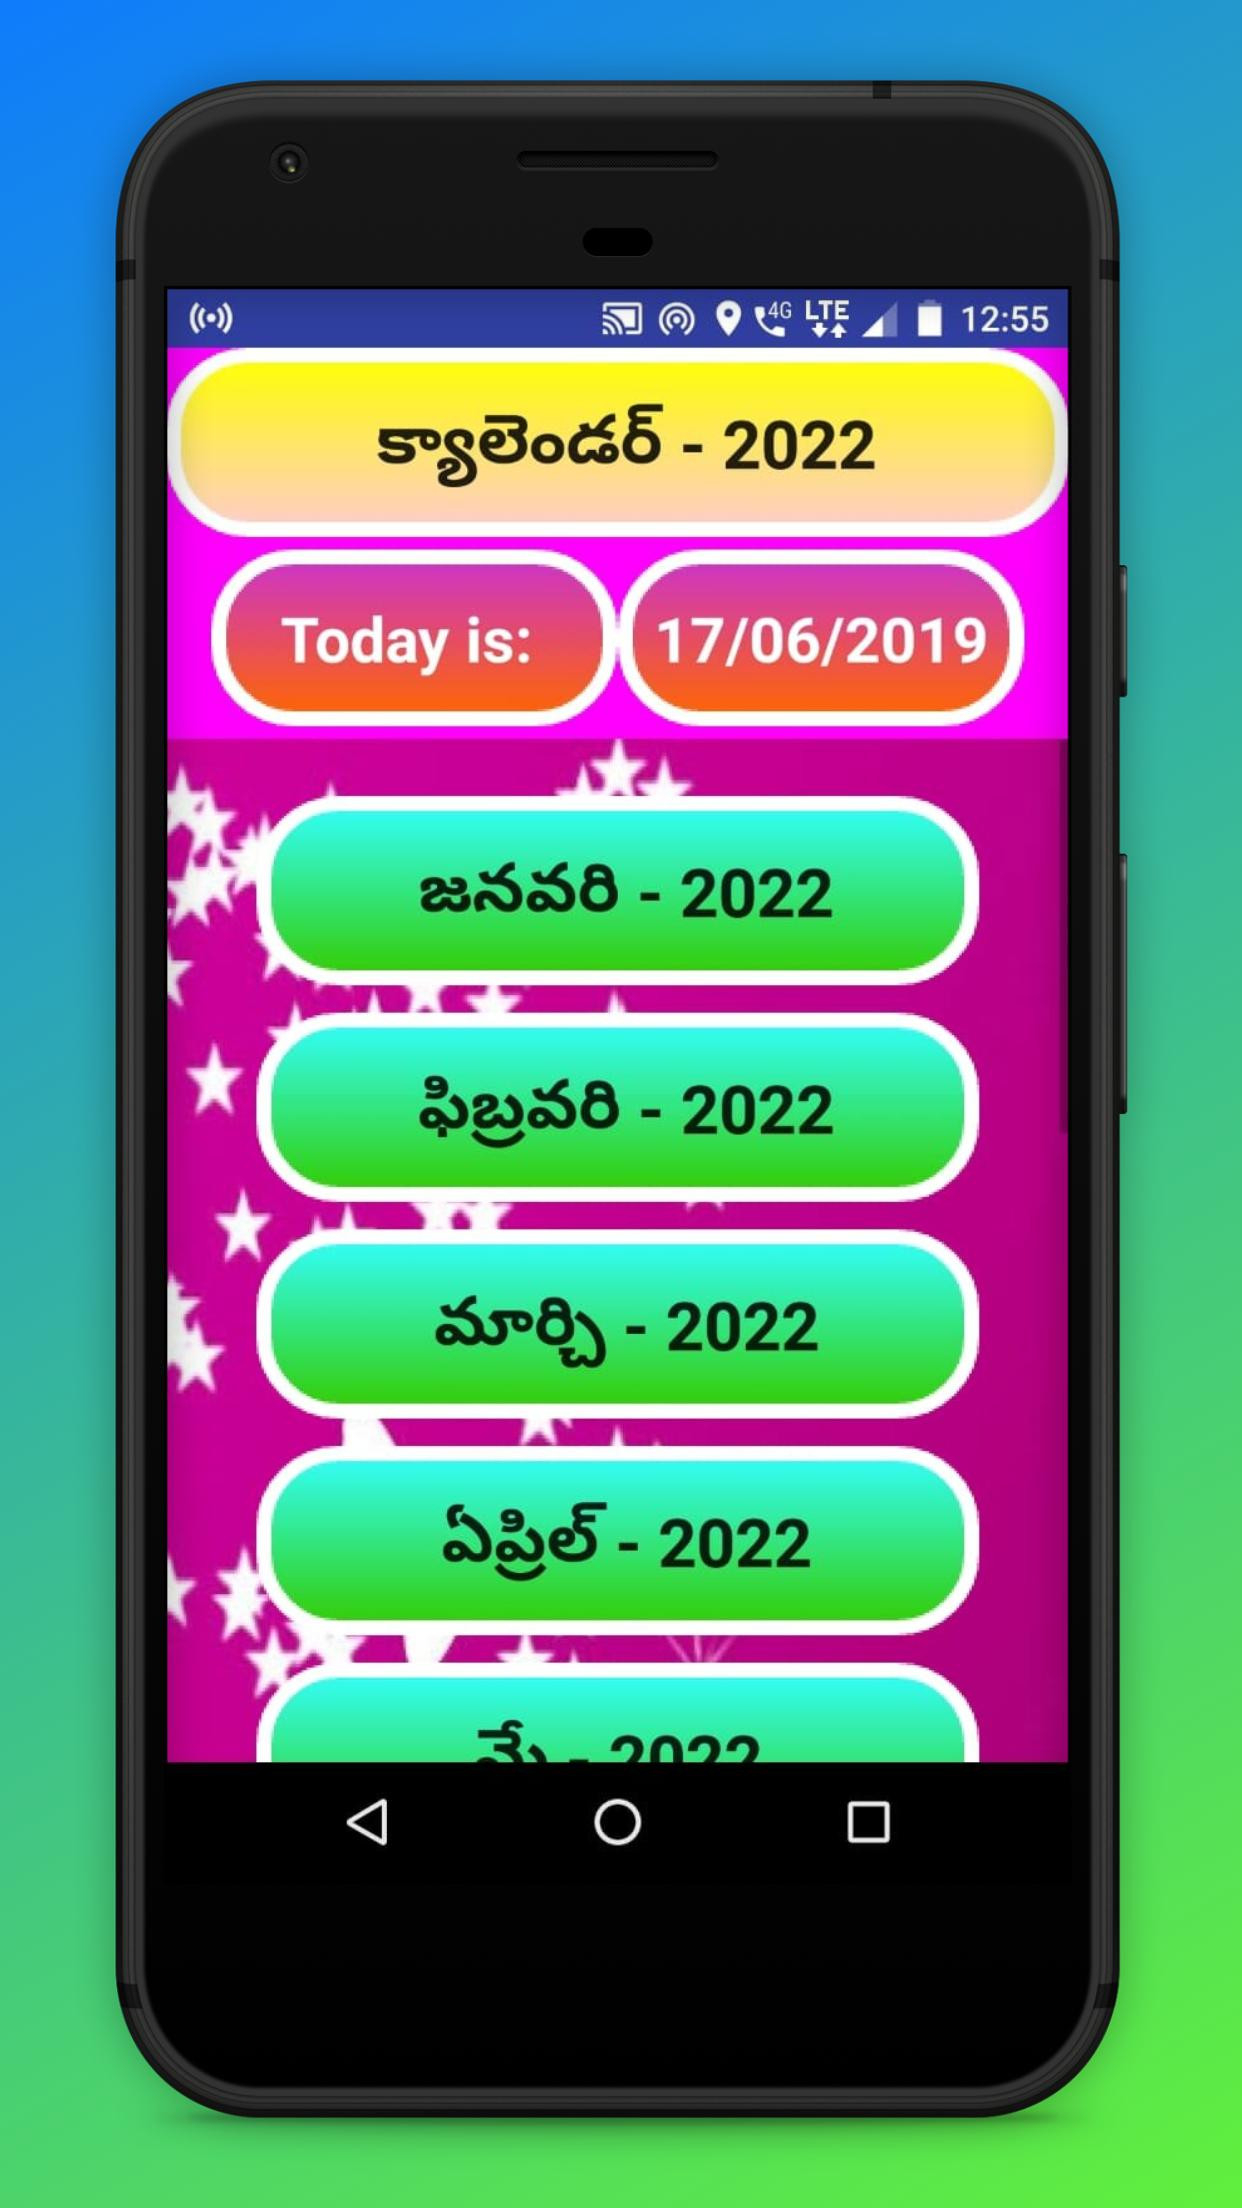 Telugu Calendar 2022 With Festivals For Android - Apk Download  Telugu Calendar 2022 Michigan